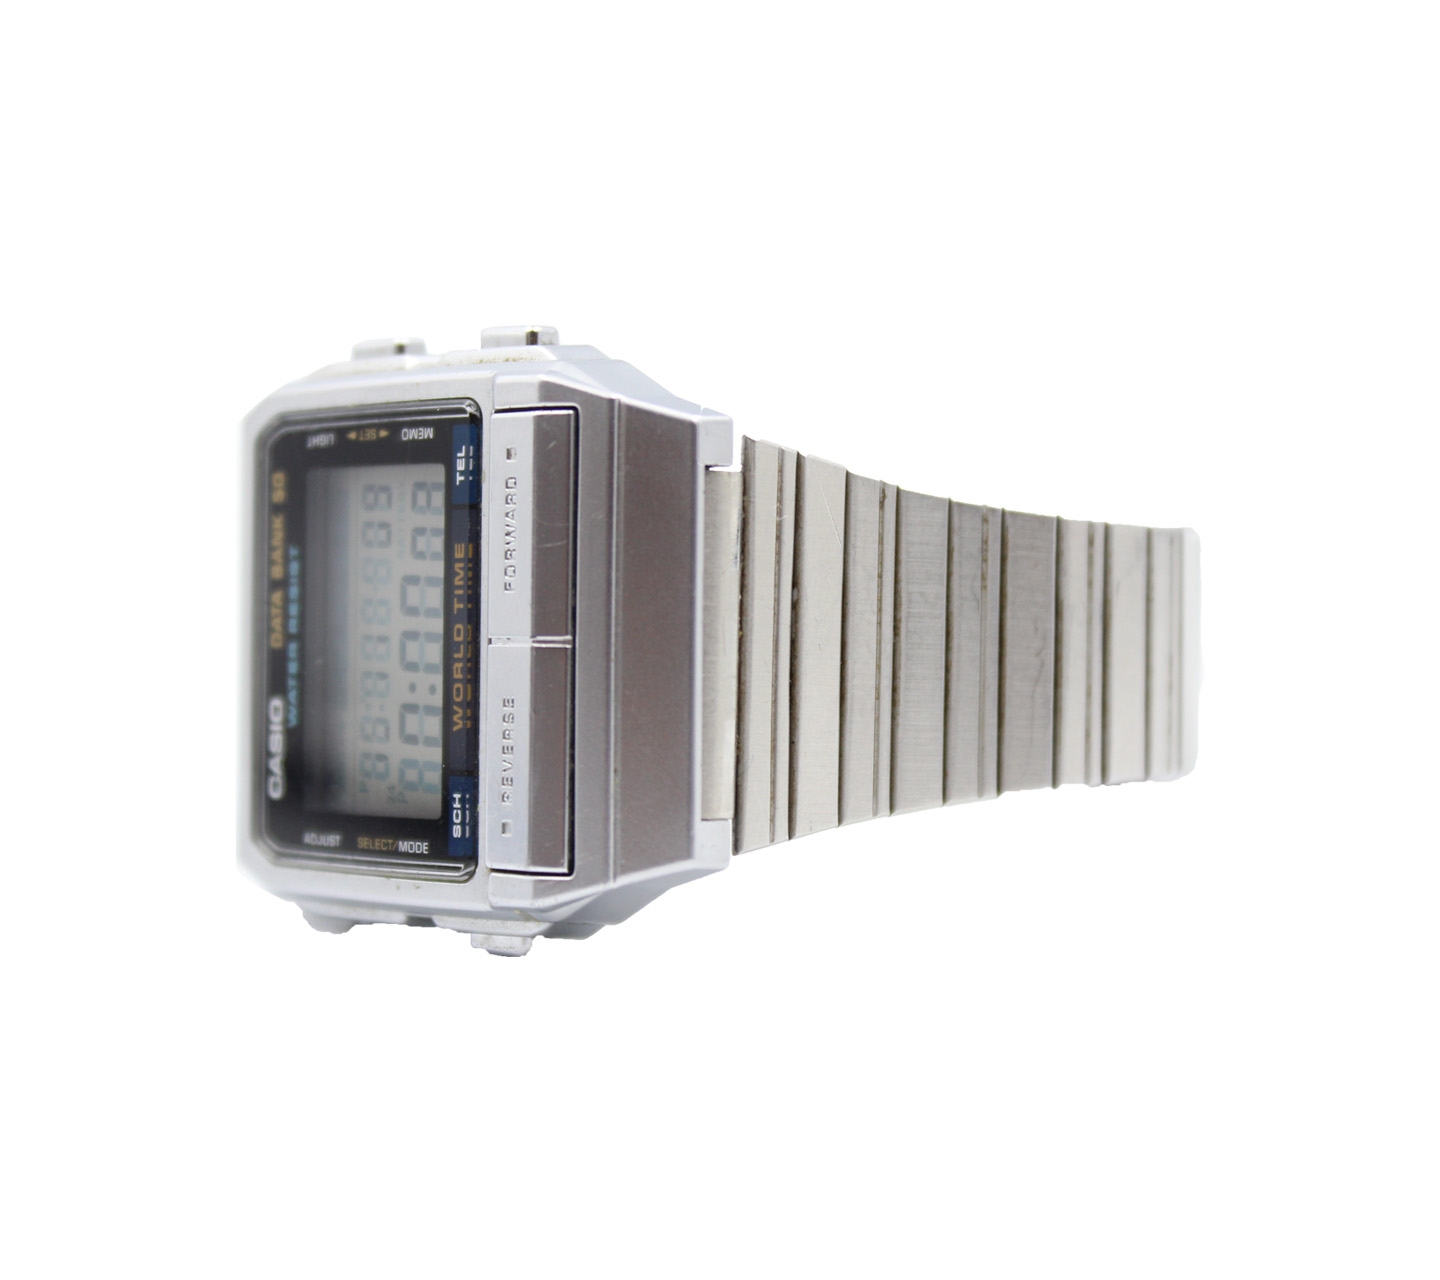 Casio Silver Wristwatch